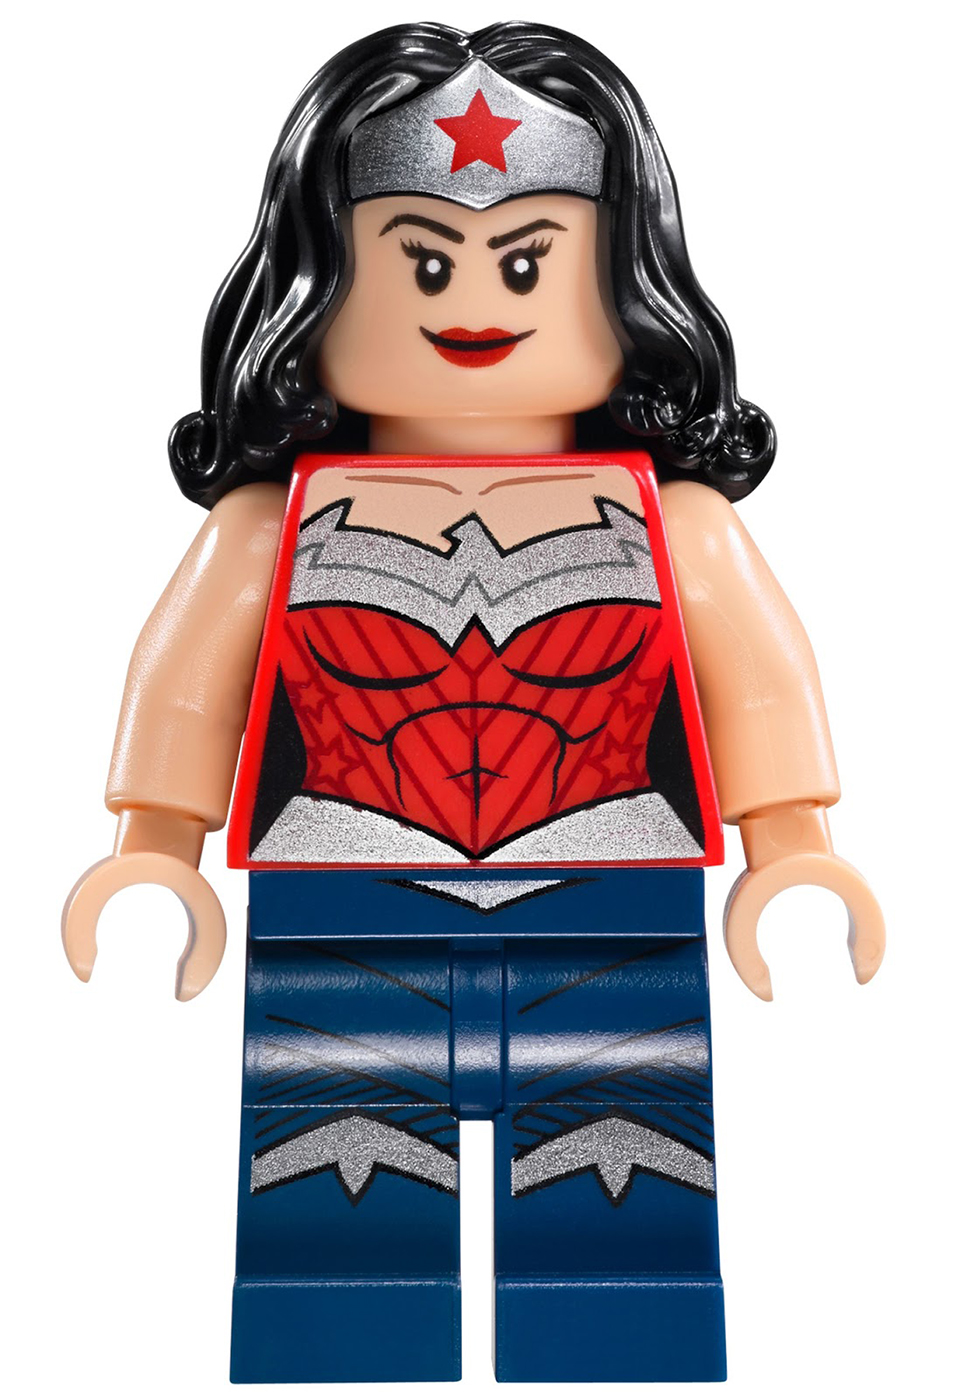 Image - Lego wonder woman invisible jet dc-comics superheroes set 76026 ...